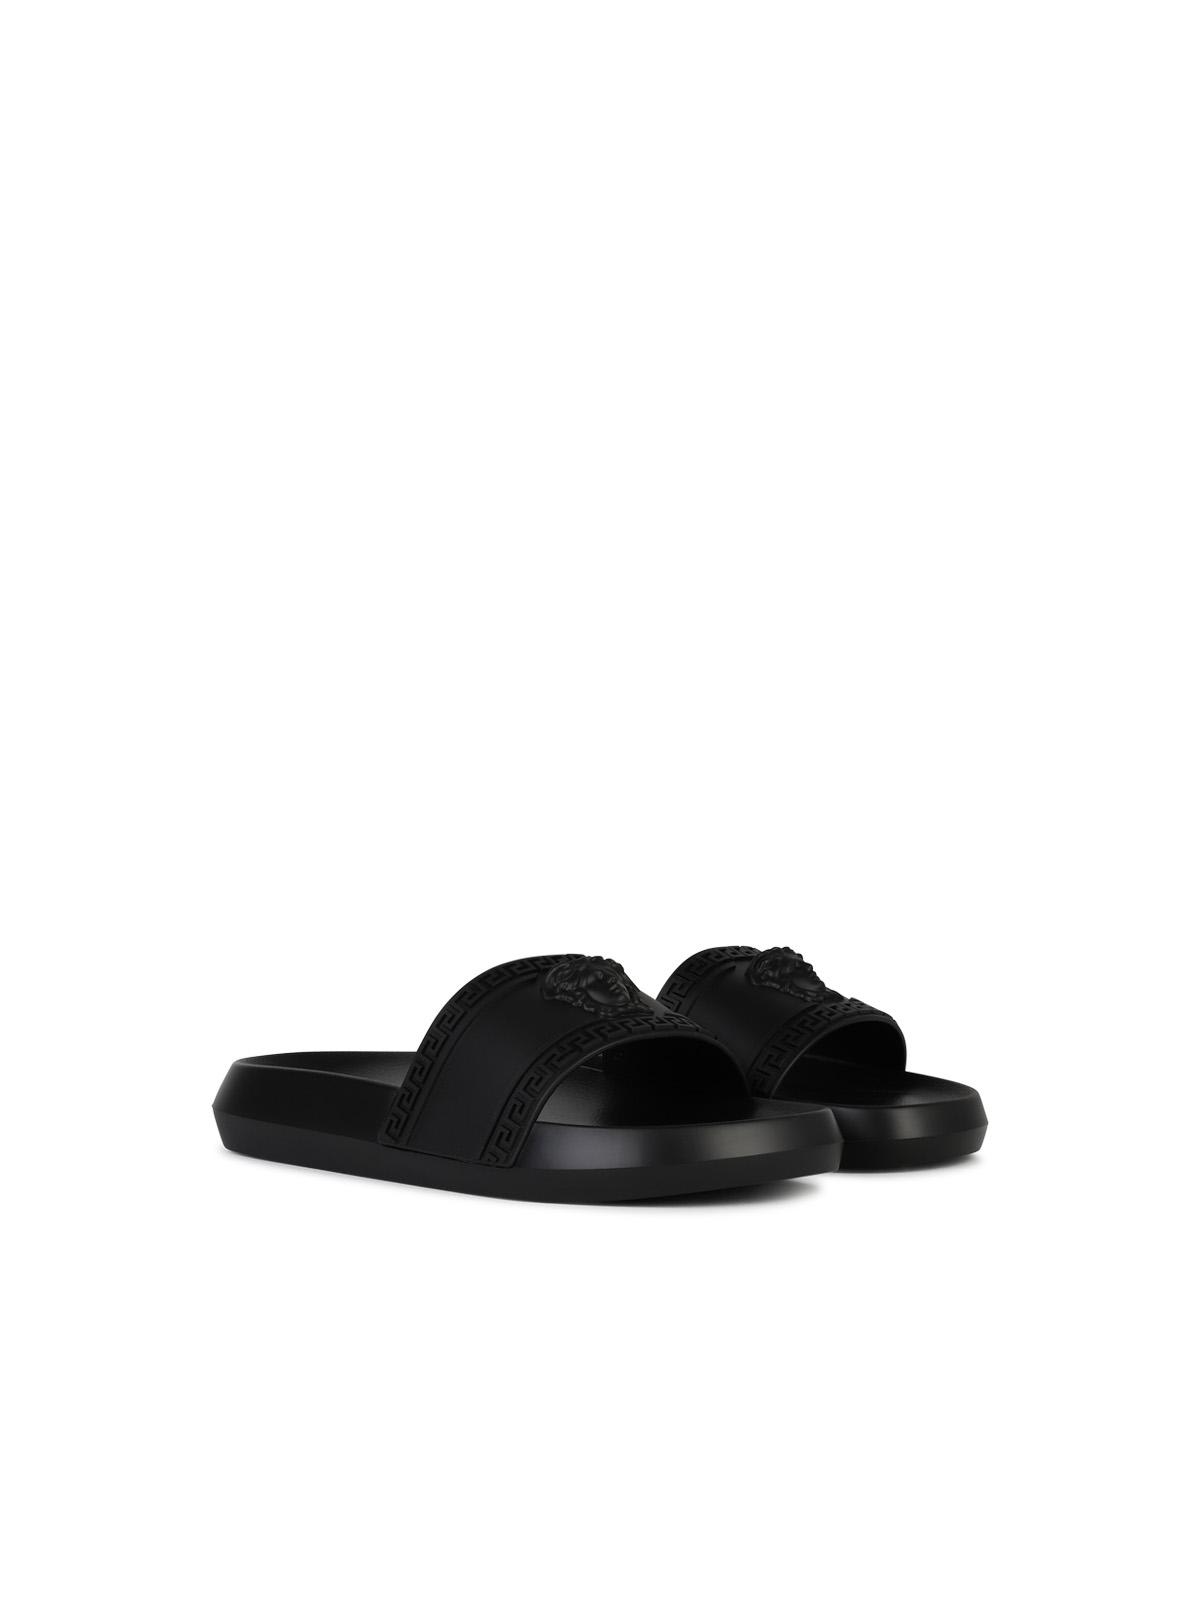 Shop Versace Black Rubber Slippers